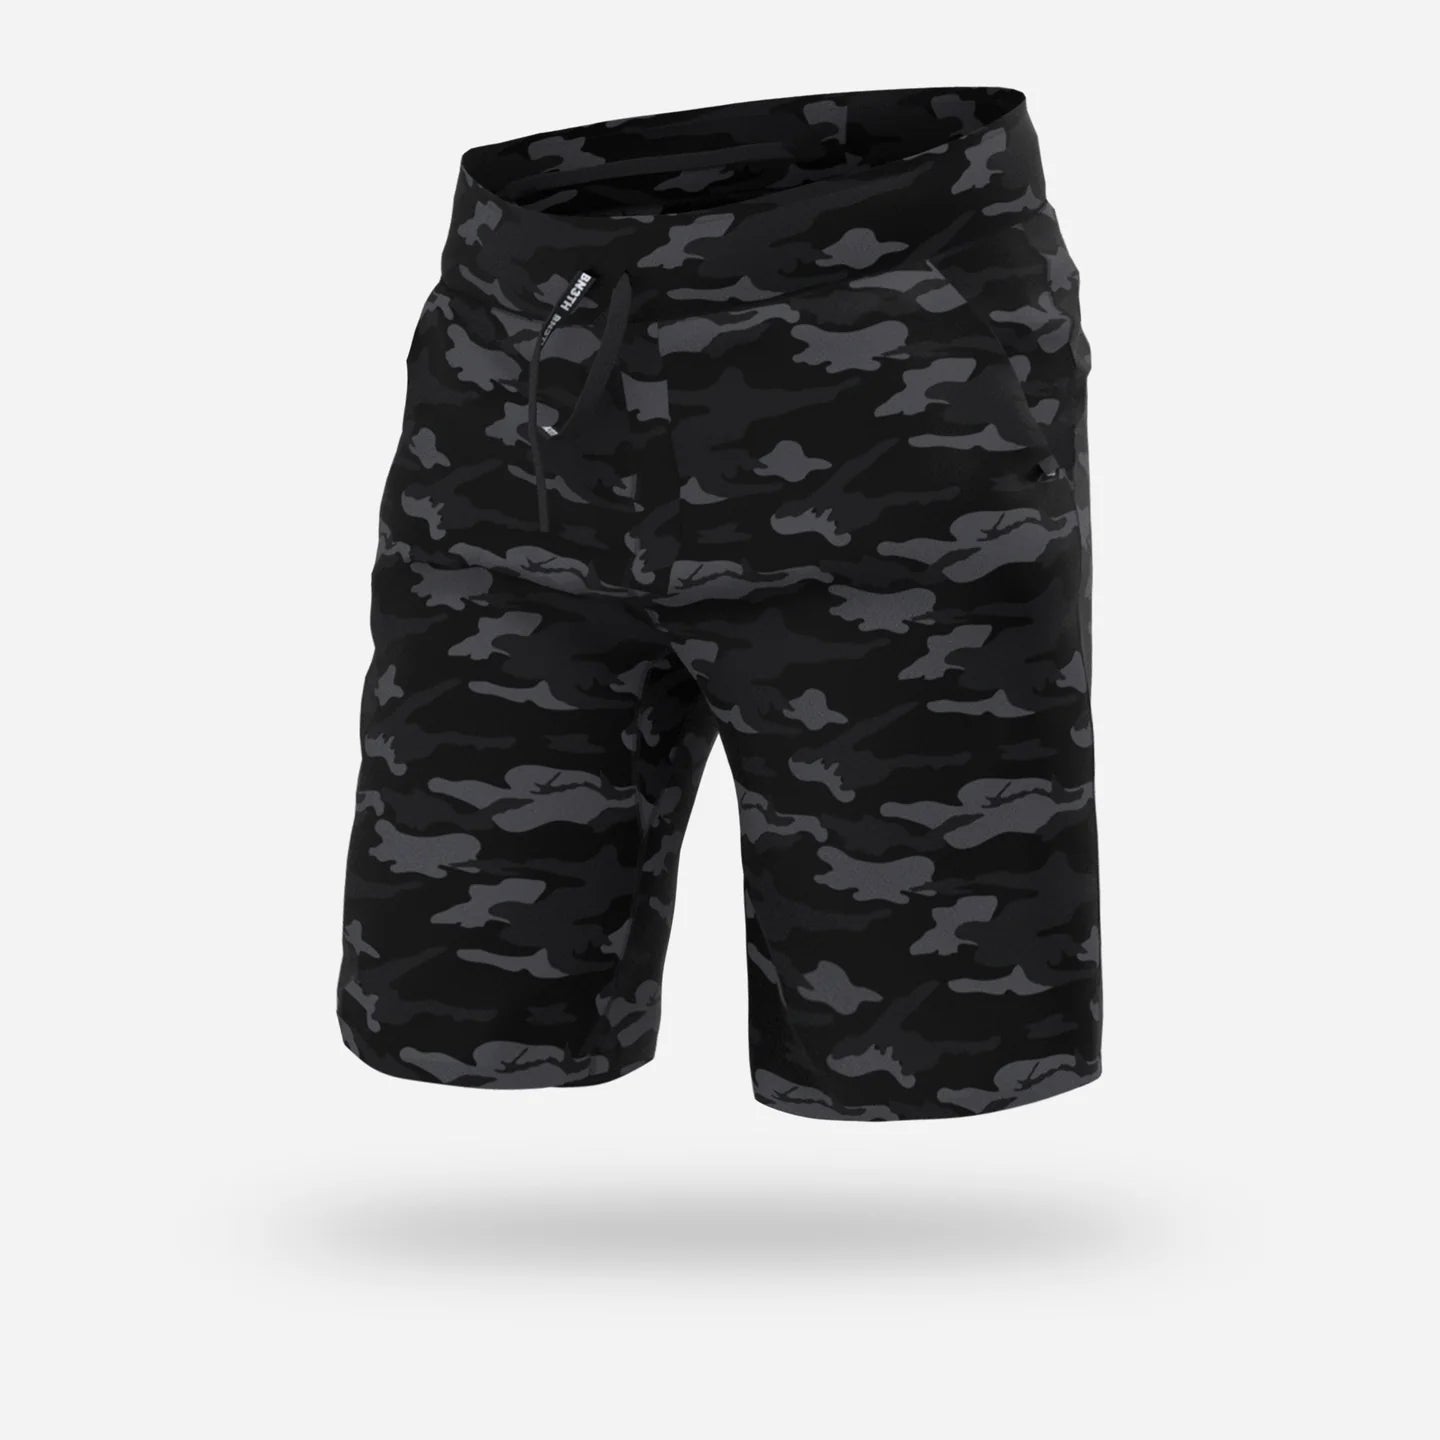 Bn3th - Sleepwear Shorts : Camo